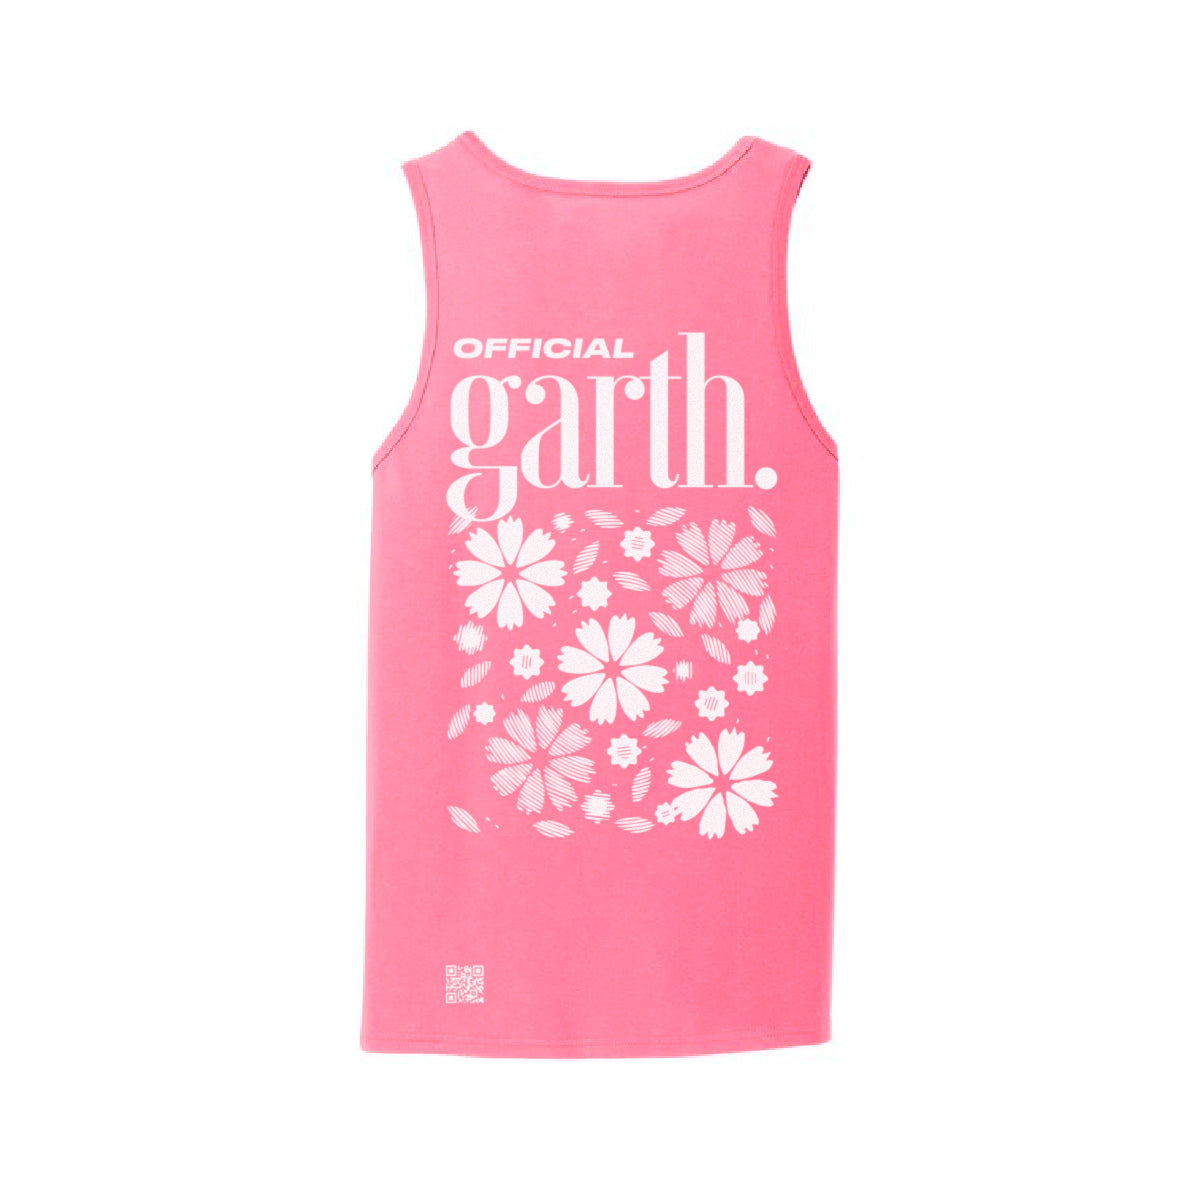 Garth. Official Pink Tank